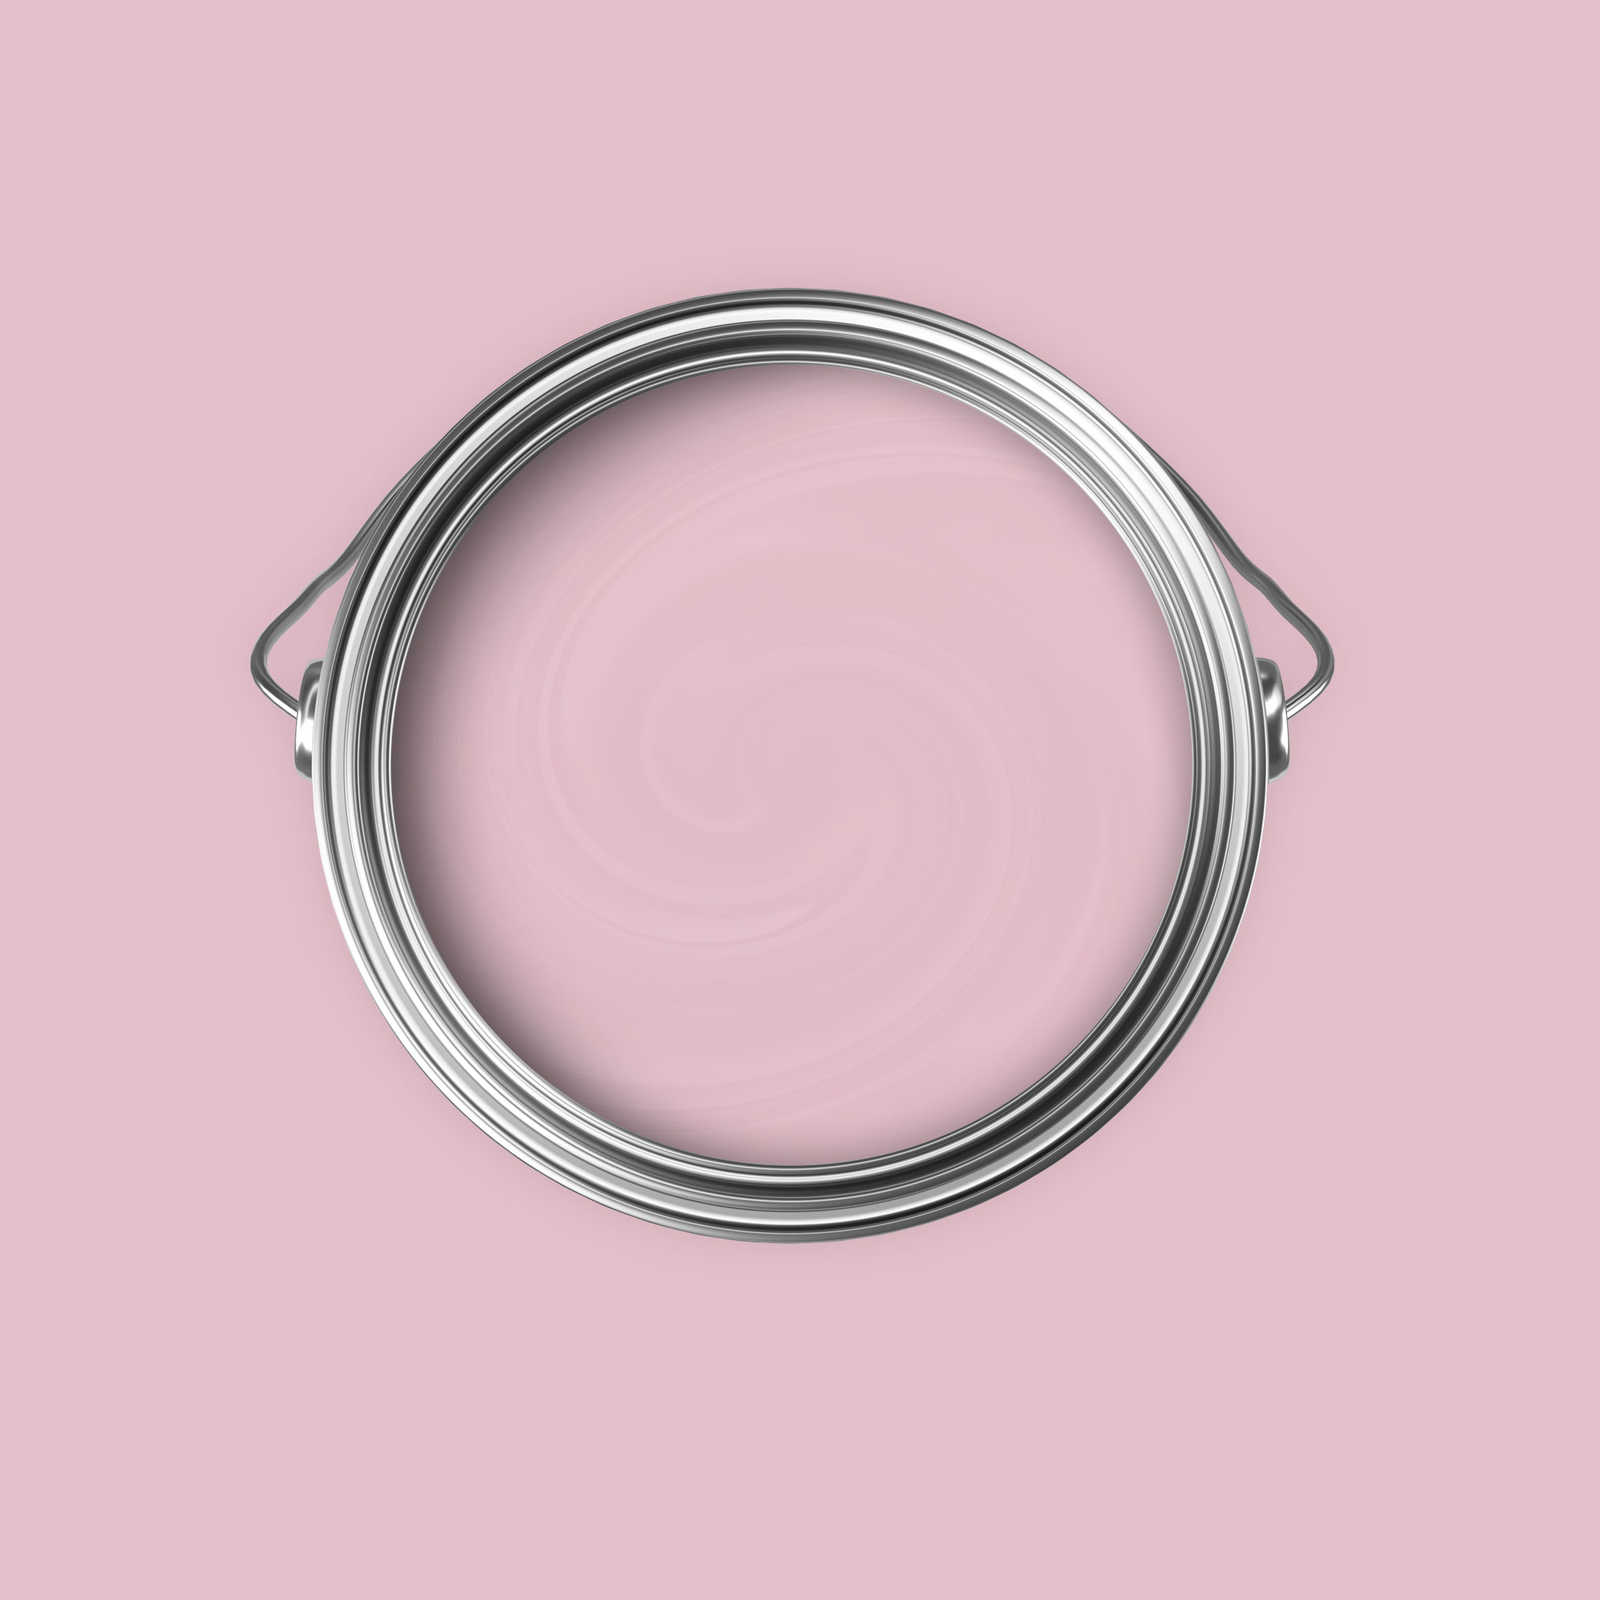             Pittura murale Premium rosa sereno »Beautiful Berry« NW209 – 5 litri
        